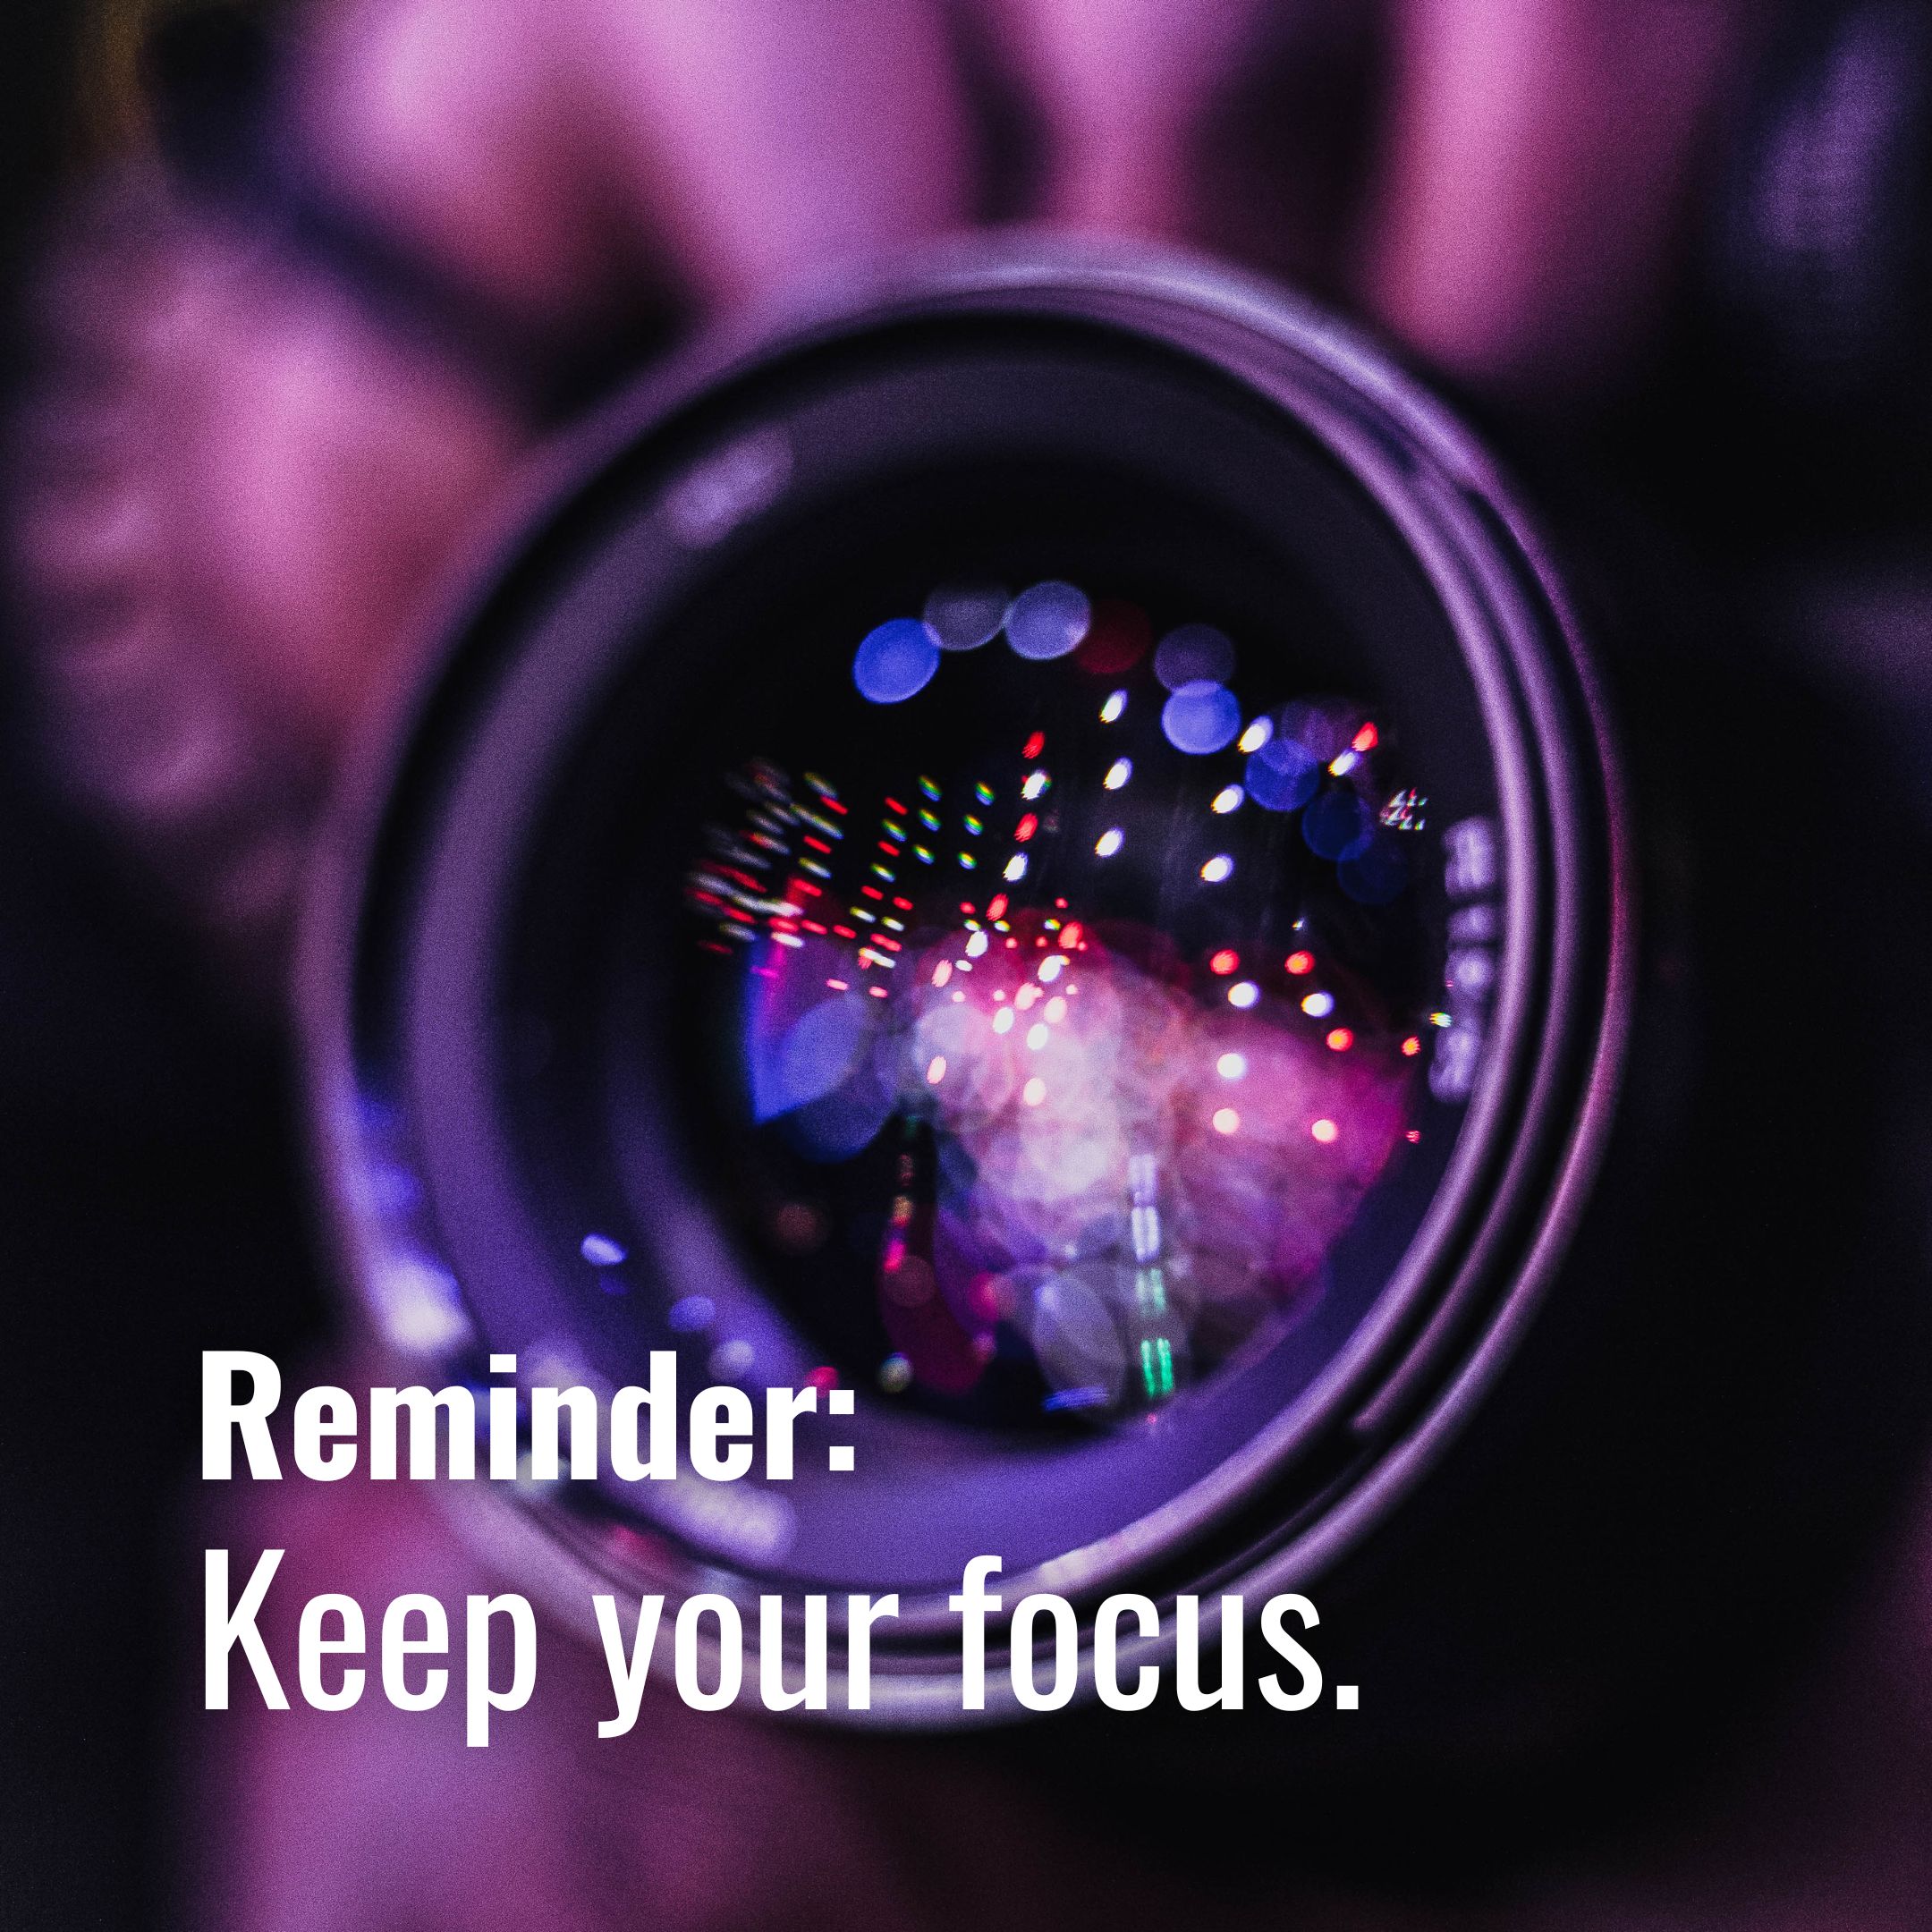 Keep your focus.